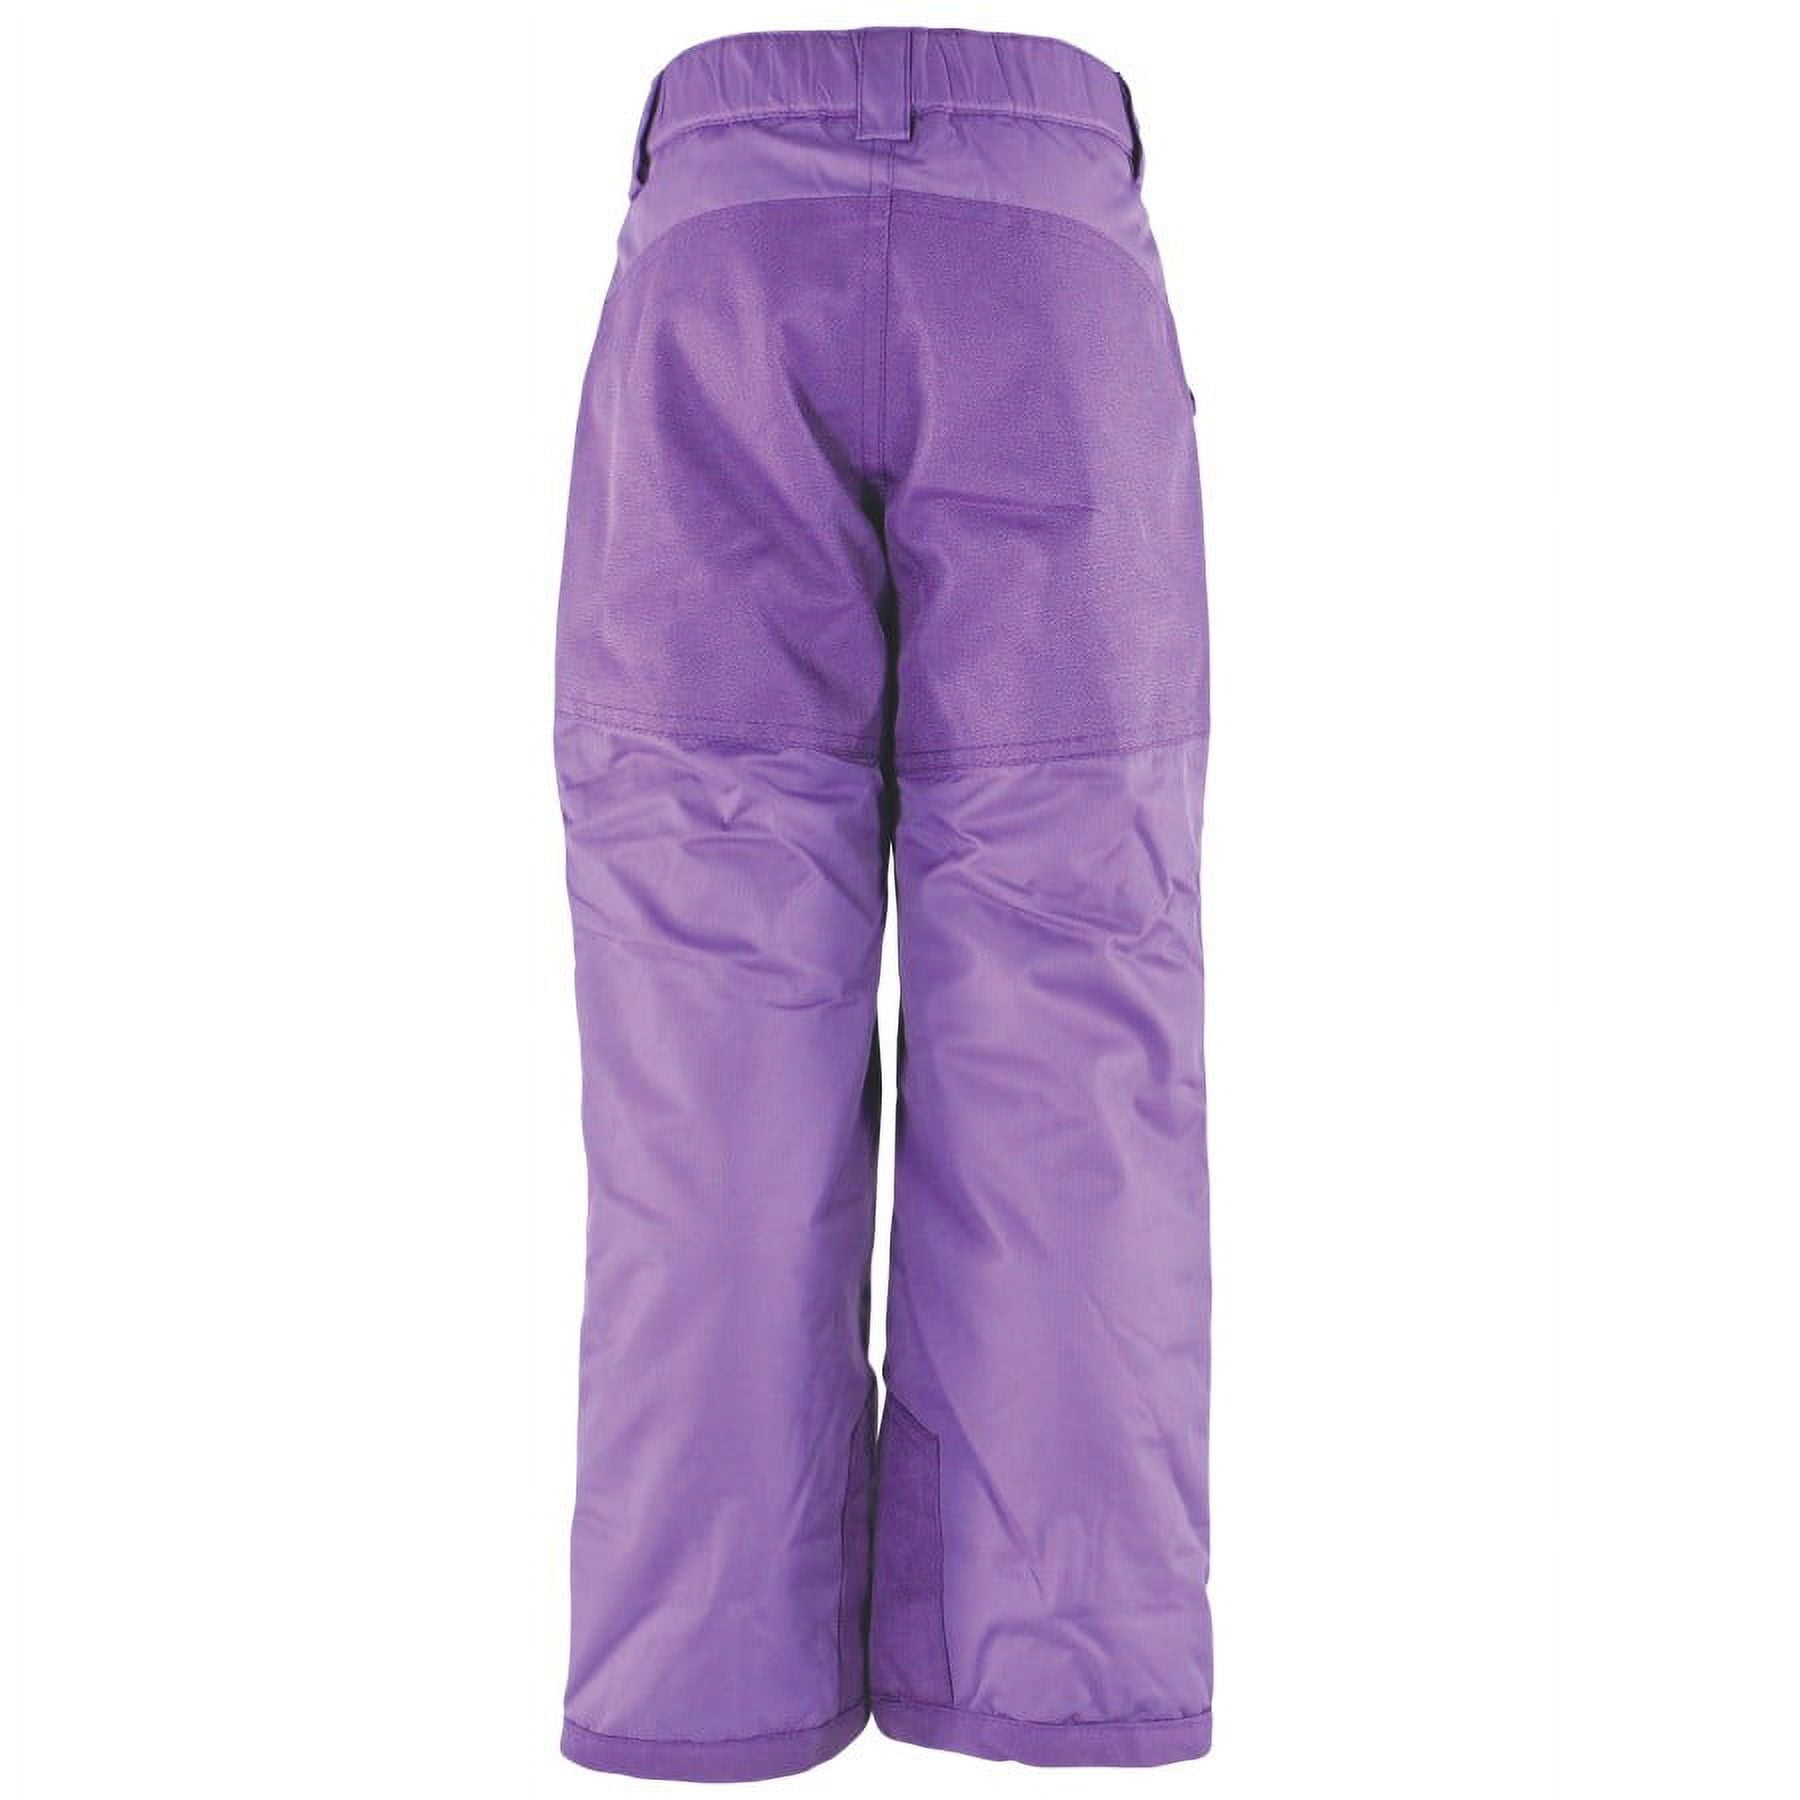 Hudson Baby Unisex Snow Pants, Purple, 2 Toddler